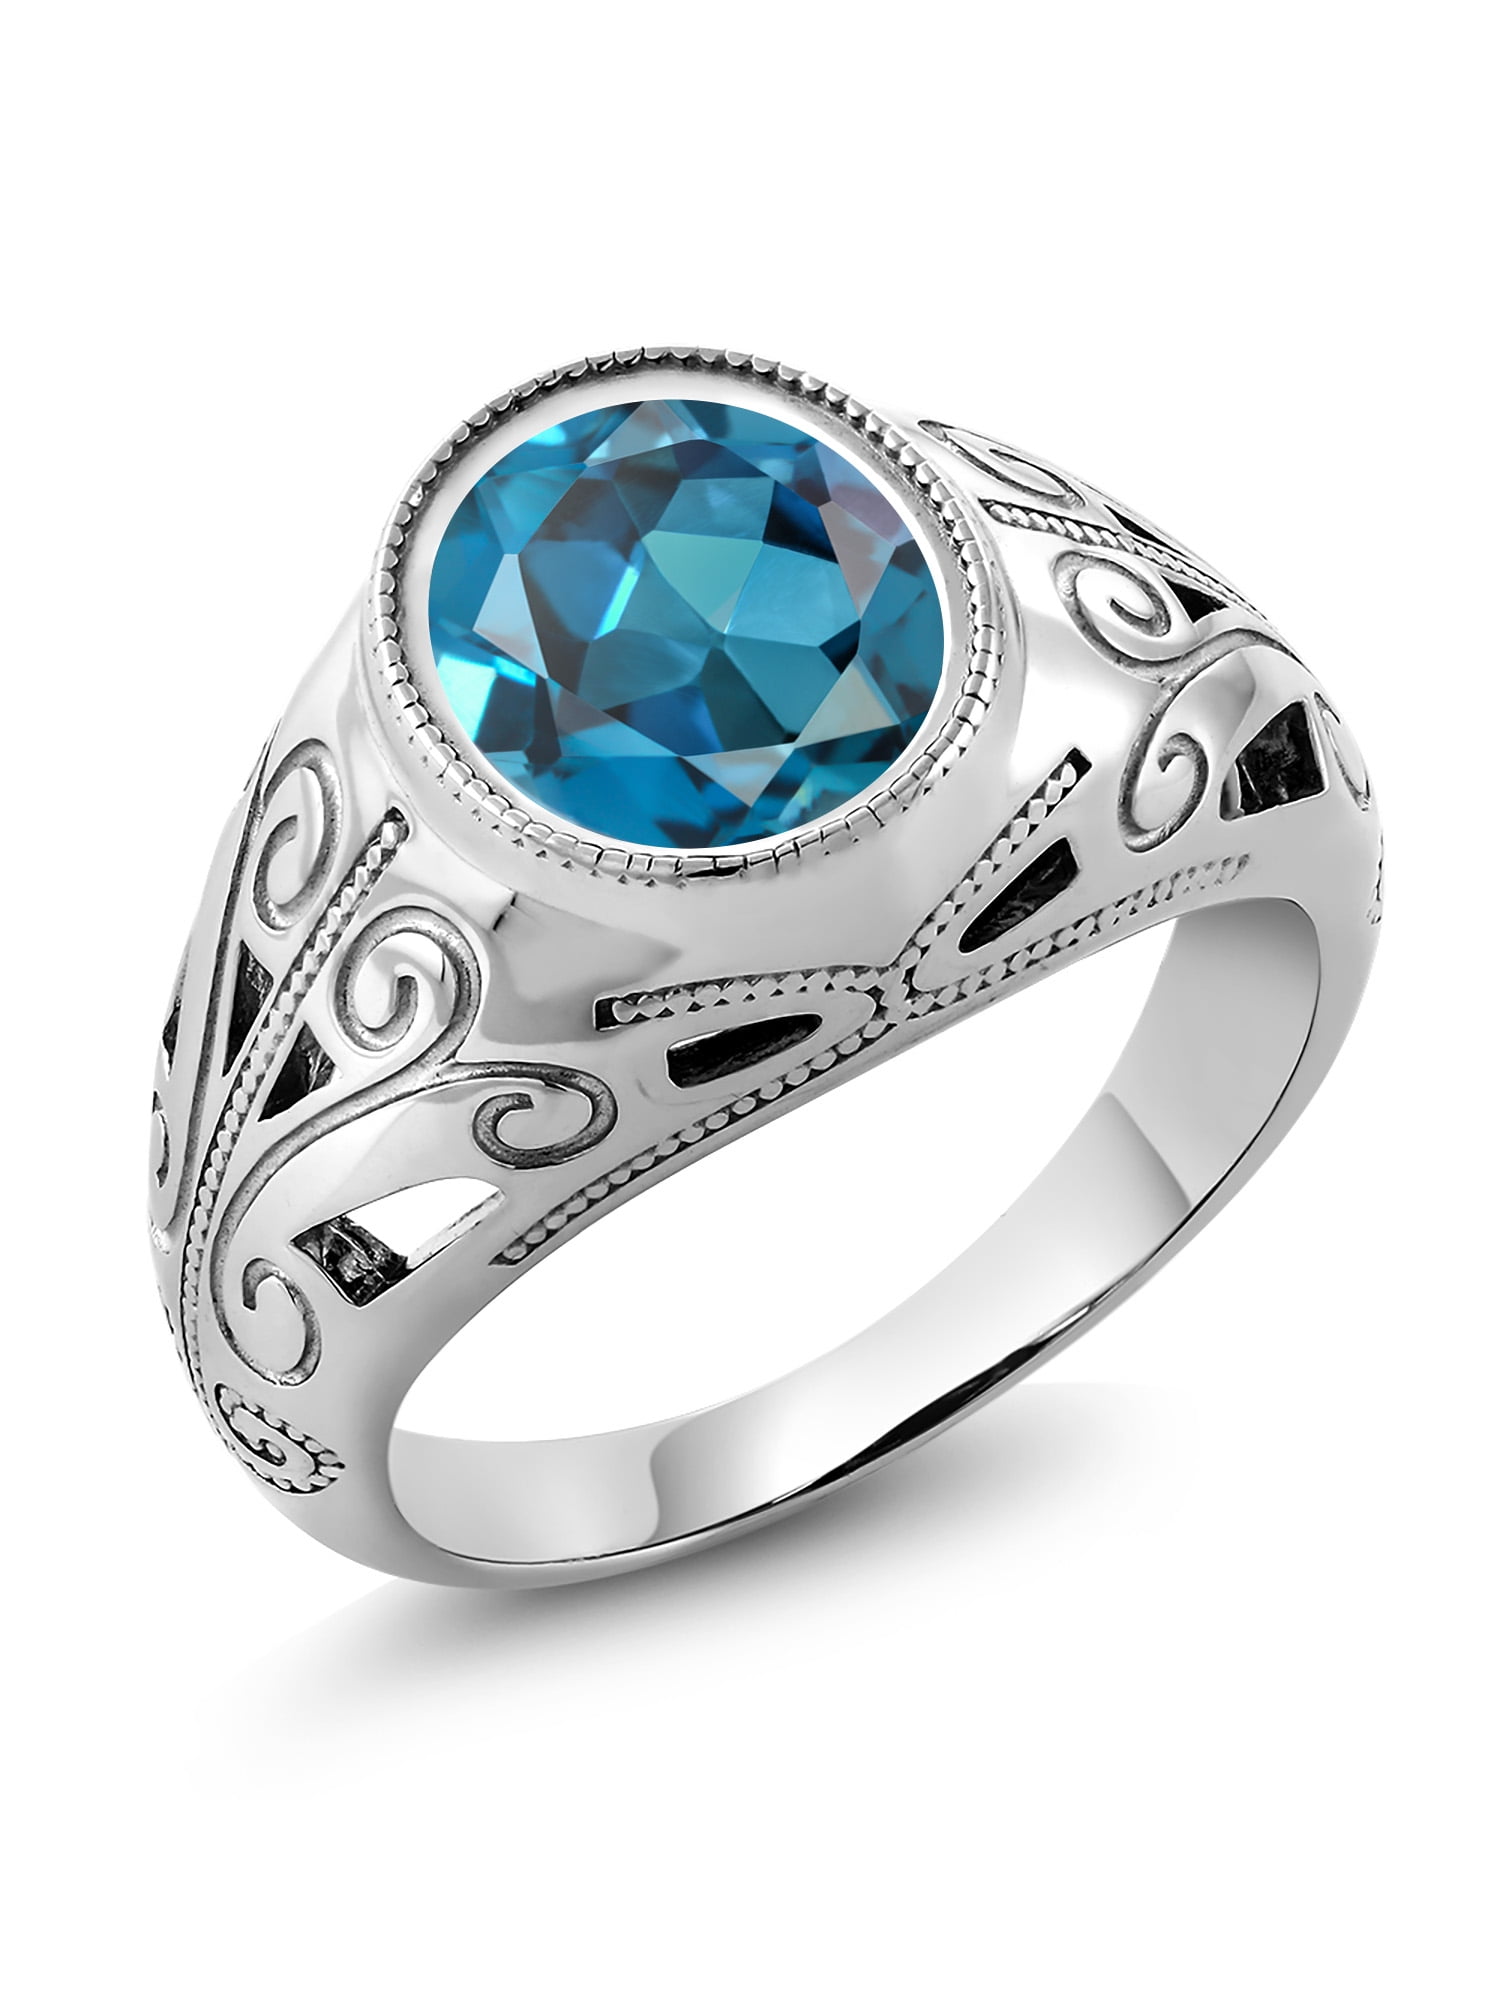 Wedding ring Anniversary Gift Topaz  Men's ring Ring For Dad silver Men's ring Birth stone Ring Blue topaz Ring Blue topaz stone Ring